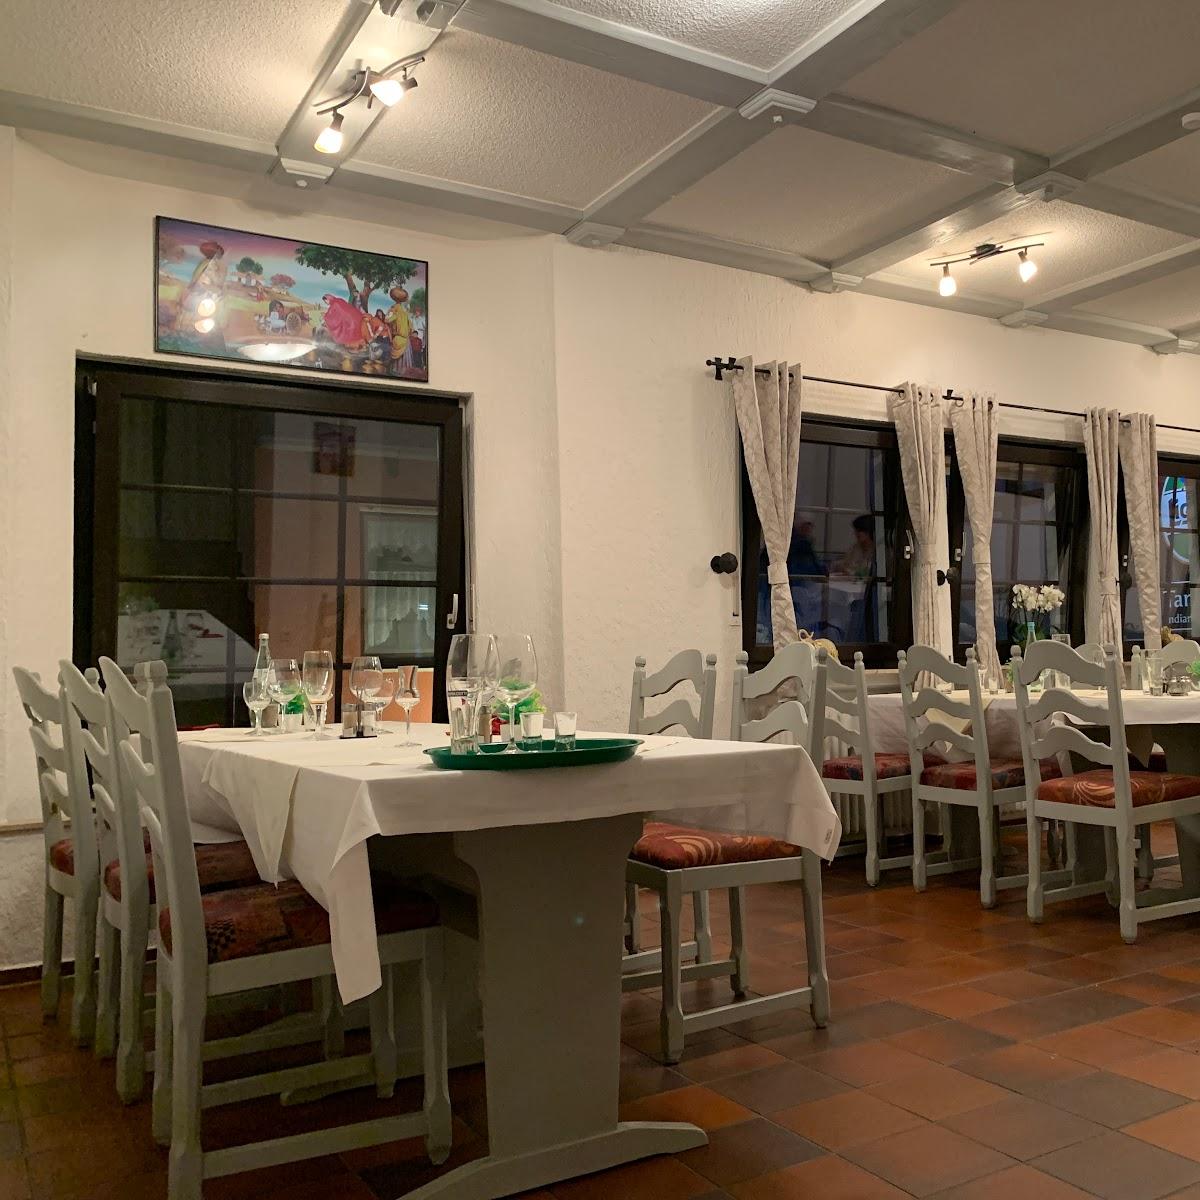 Restaurant "Tandoori - Indian Restaurant" in Laubach